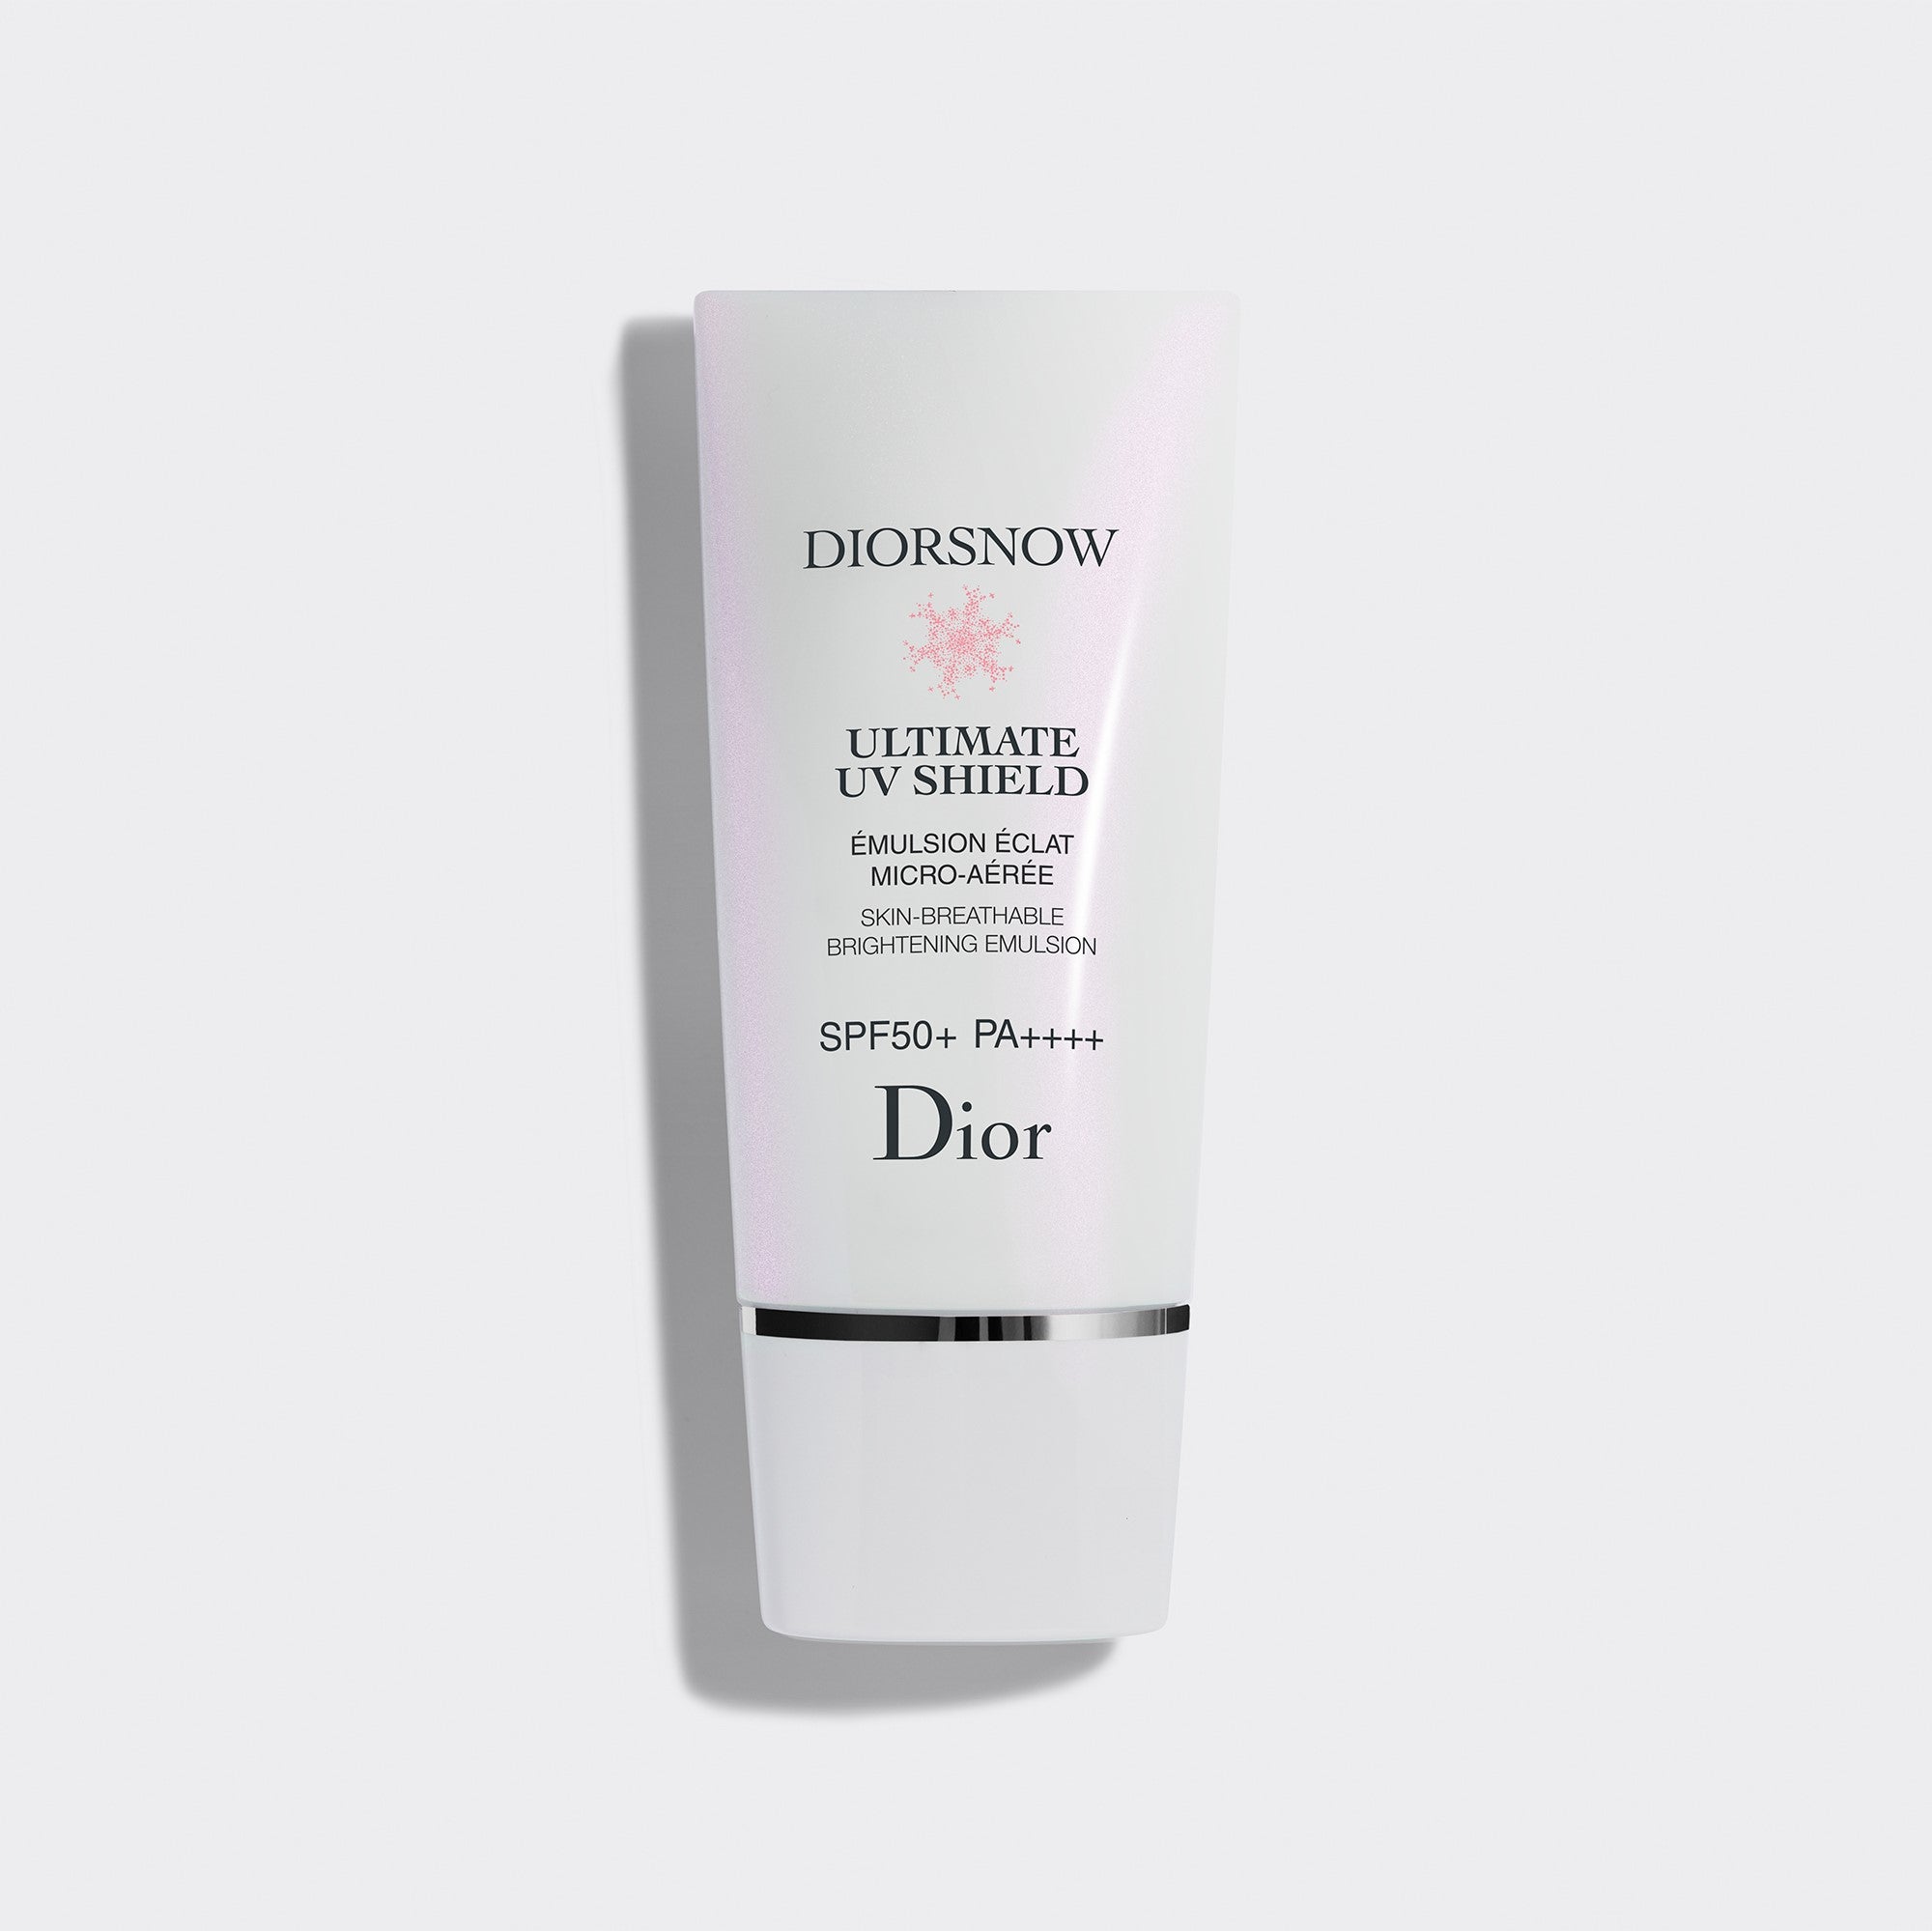 DIORSNOW - ULTIMATE UV SHIELD (SPF 50+ PA++++) ~ Skin-breathable brightening emulsion - SPF 50+ pa++++